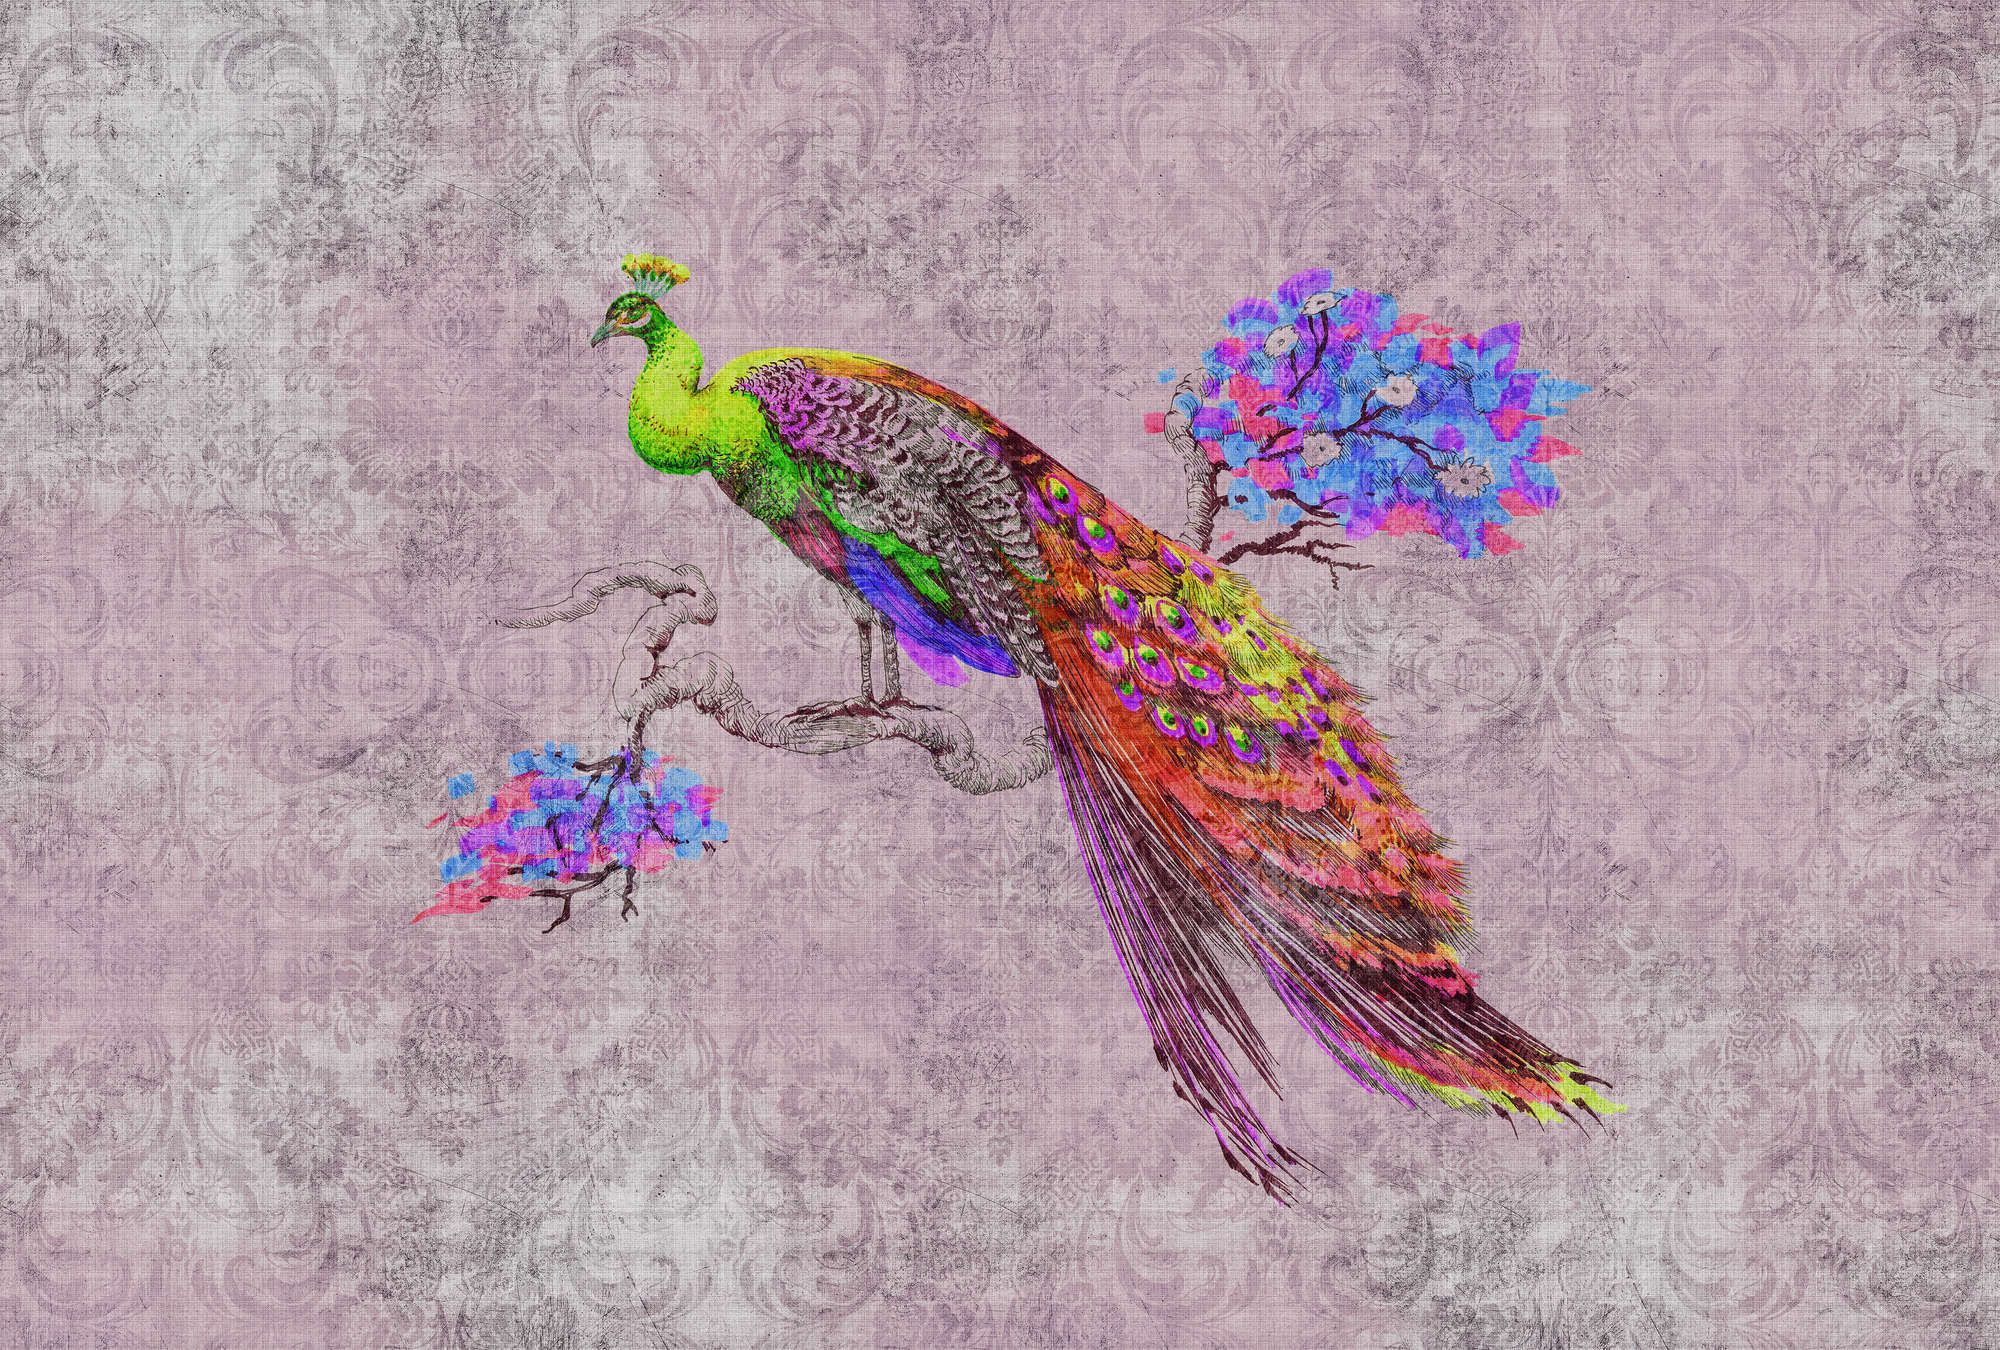             Peacock 2 - Photo wallpaper with peacock motif & ornament pattern in natural linen structure - Green, Pink | Matt smooth fleece
        